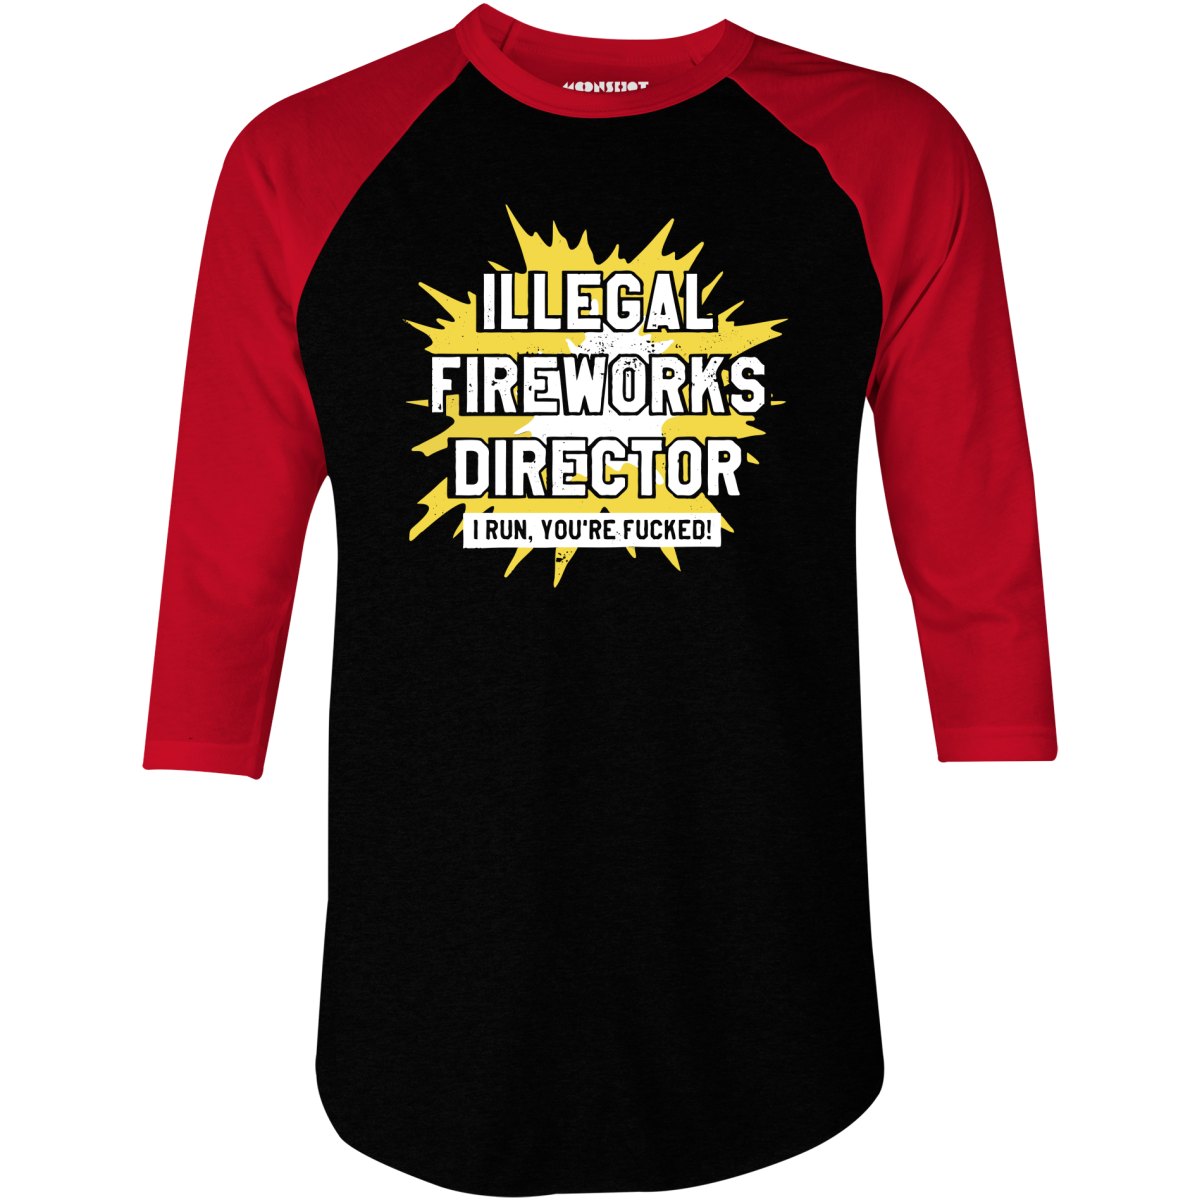 Illegal Fireworks Director I Run, You're Fucked - 3/4 Sleeve Raglan T-Shirt